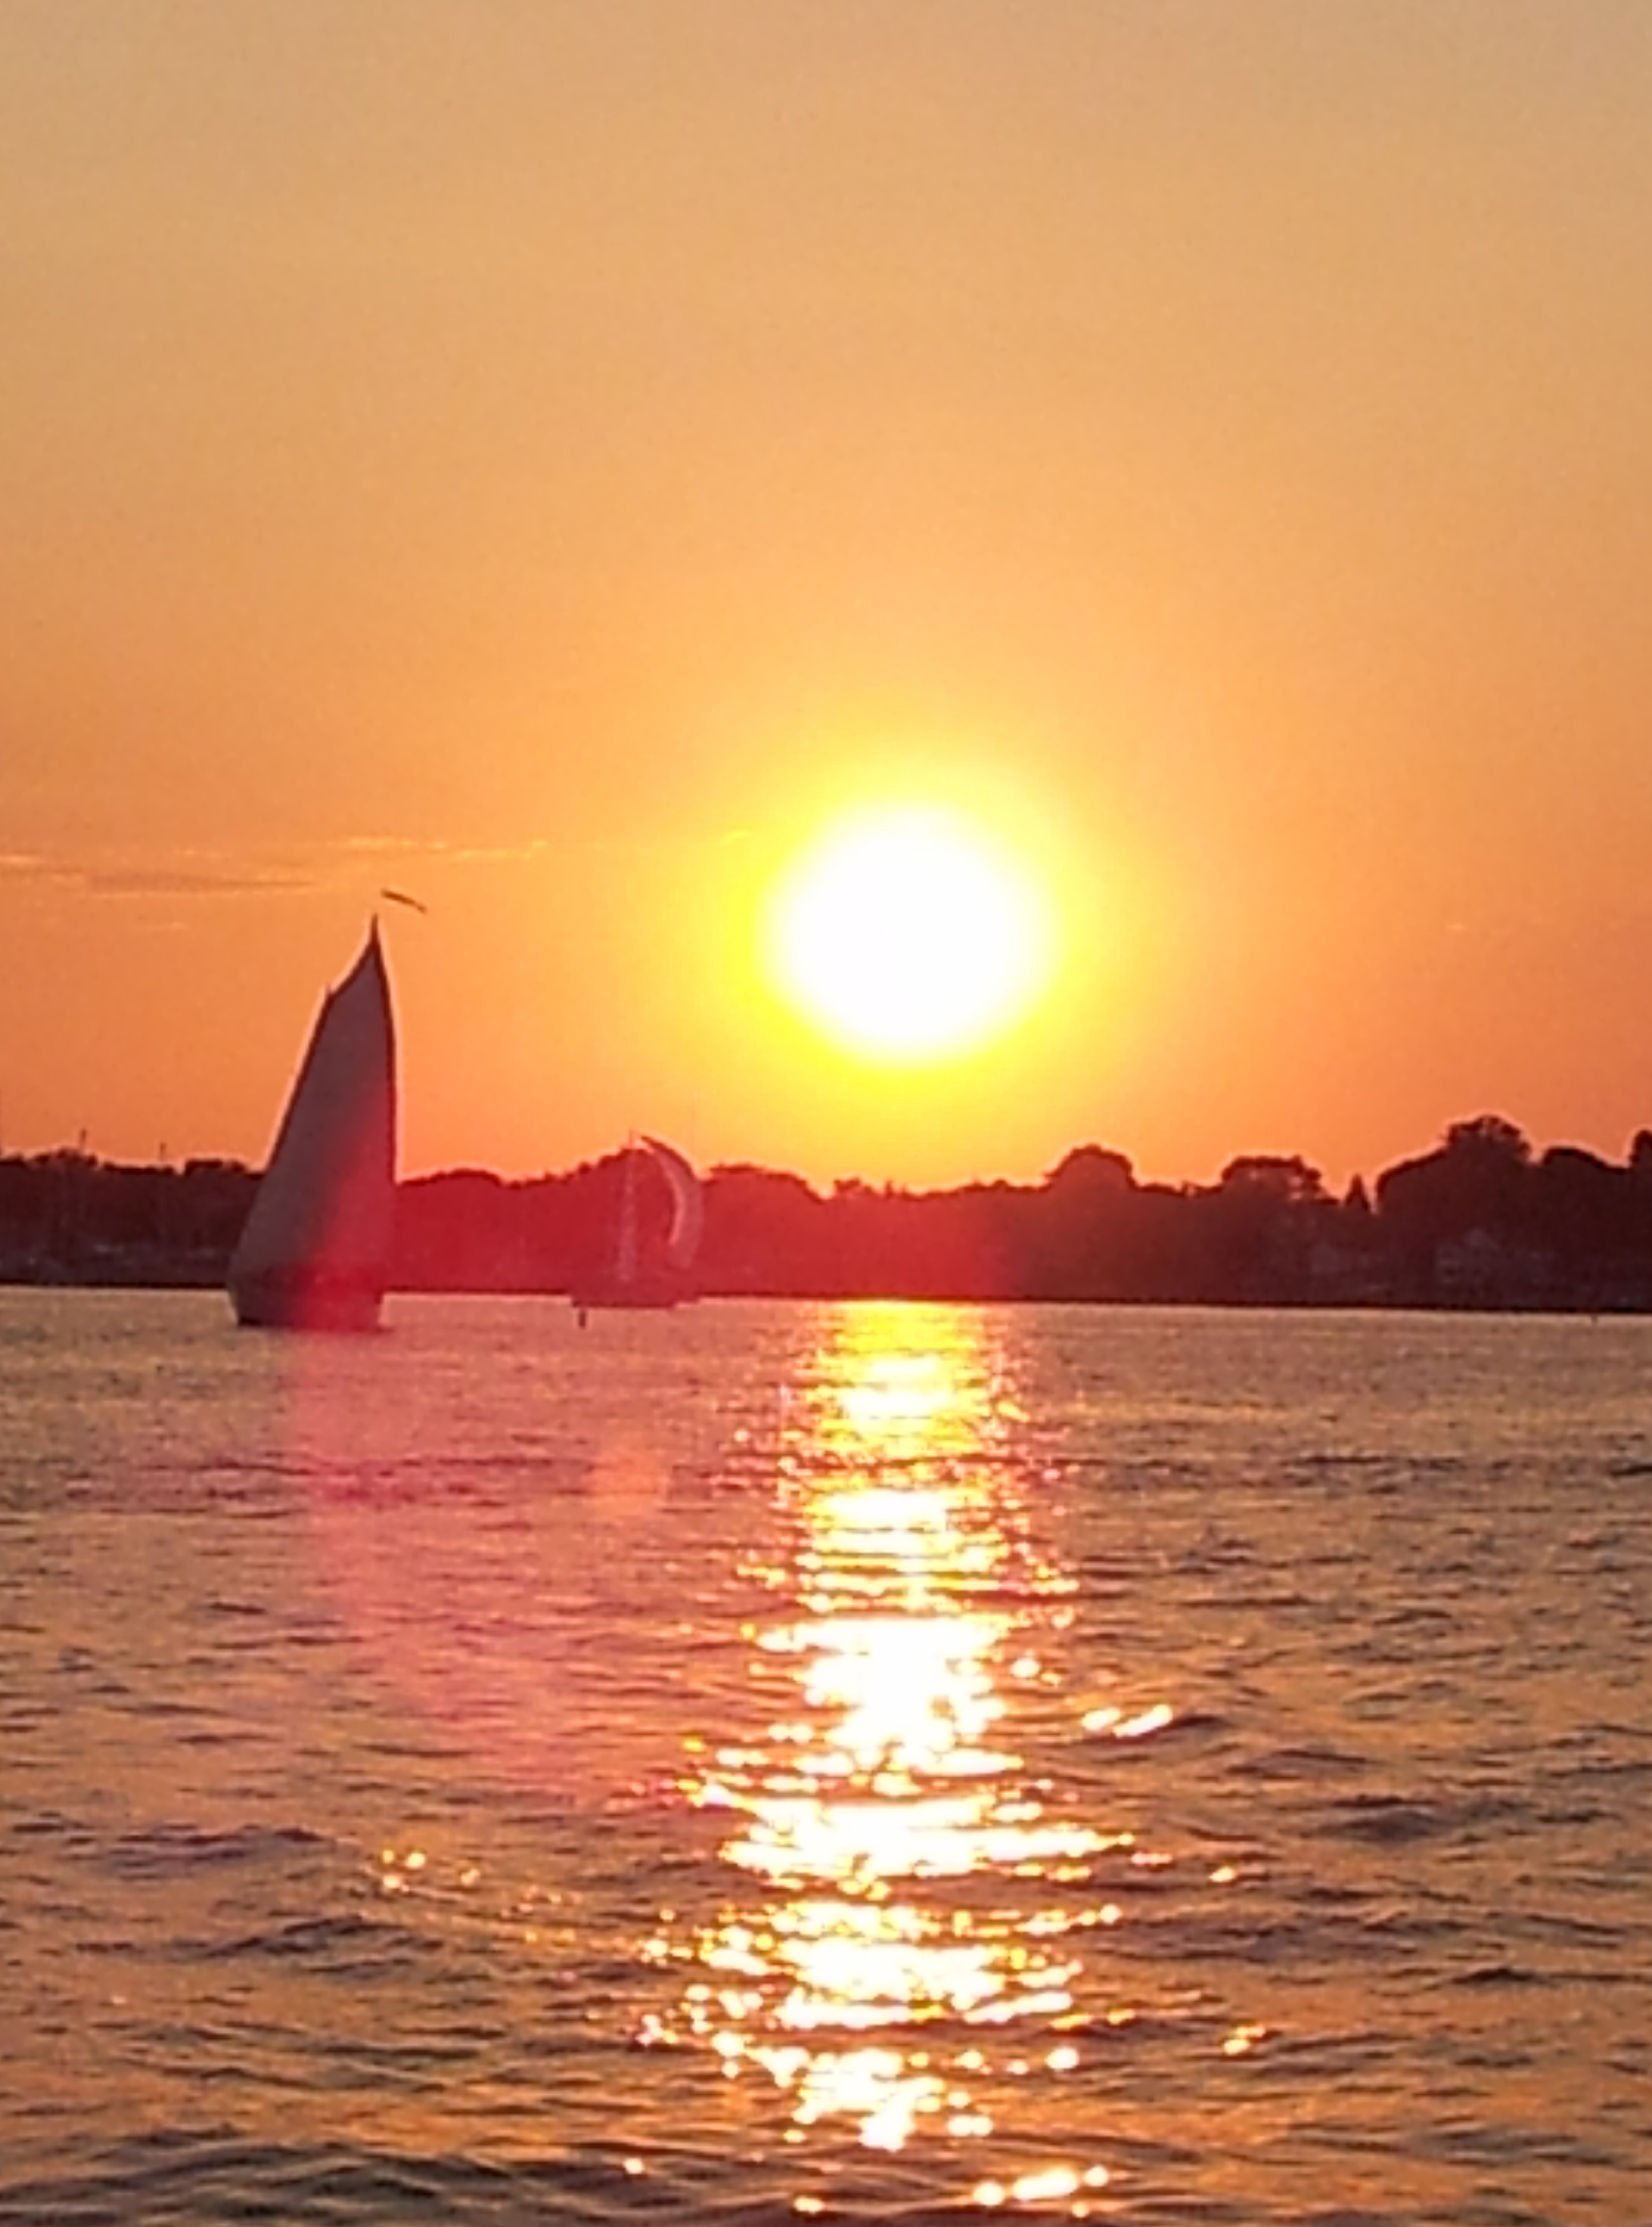 Bright ball of sun and sail boats